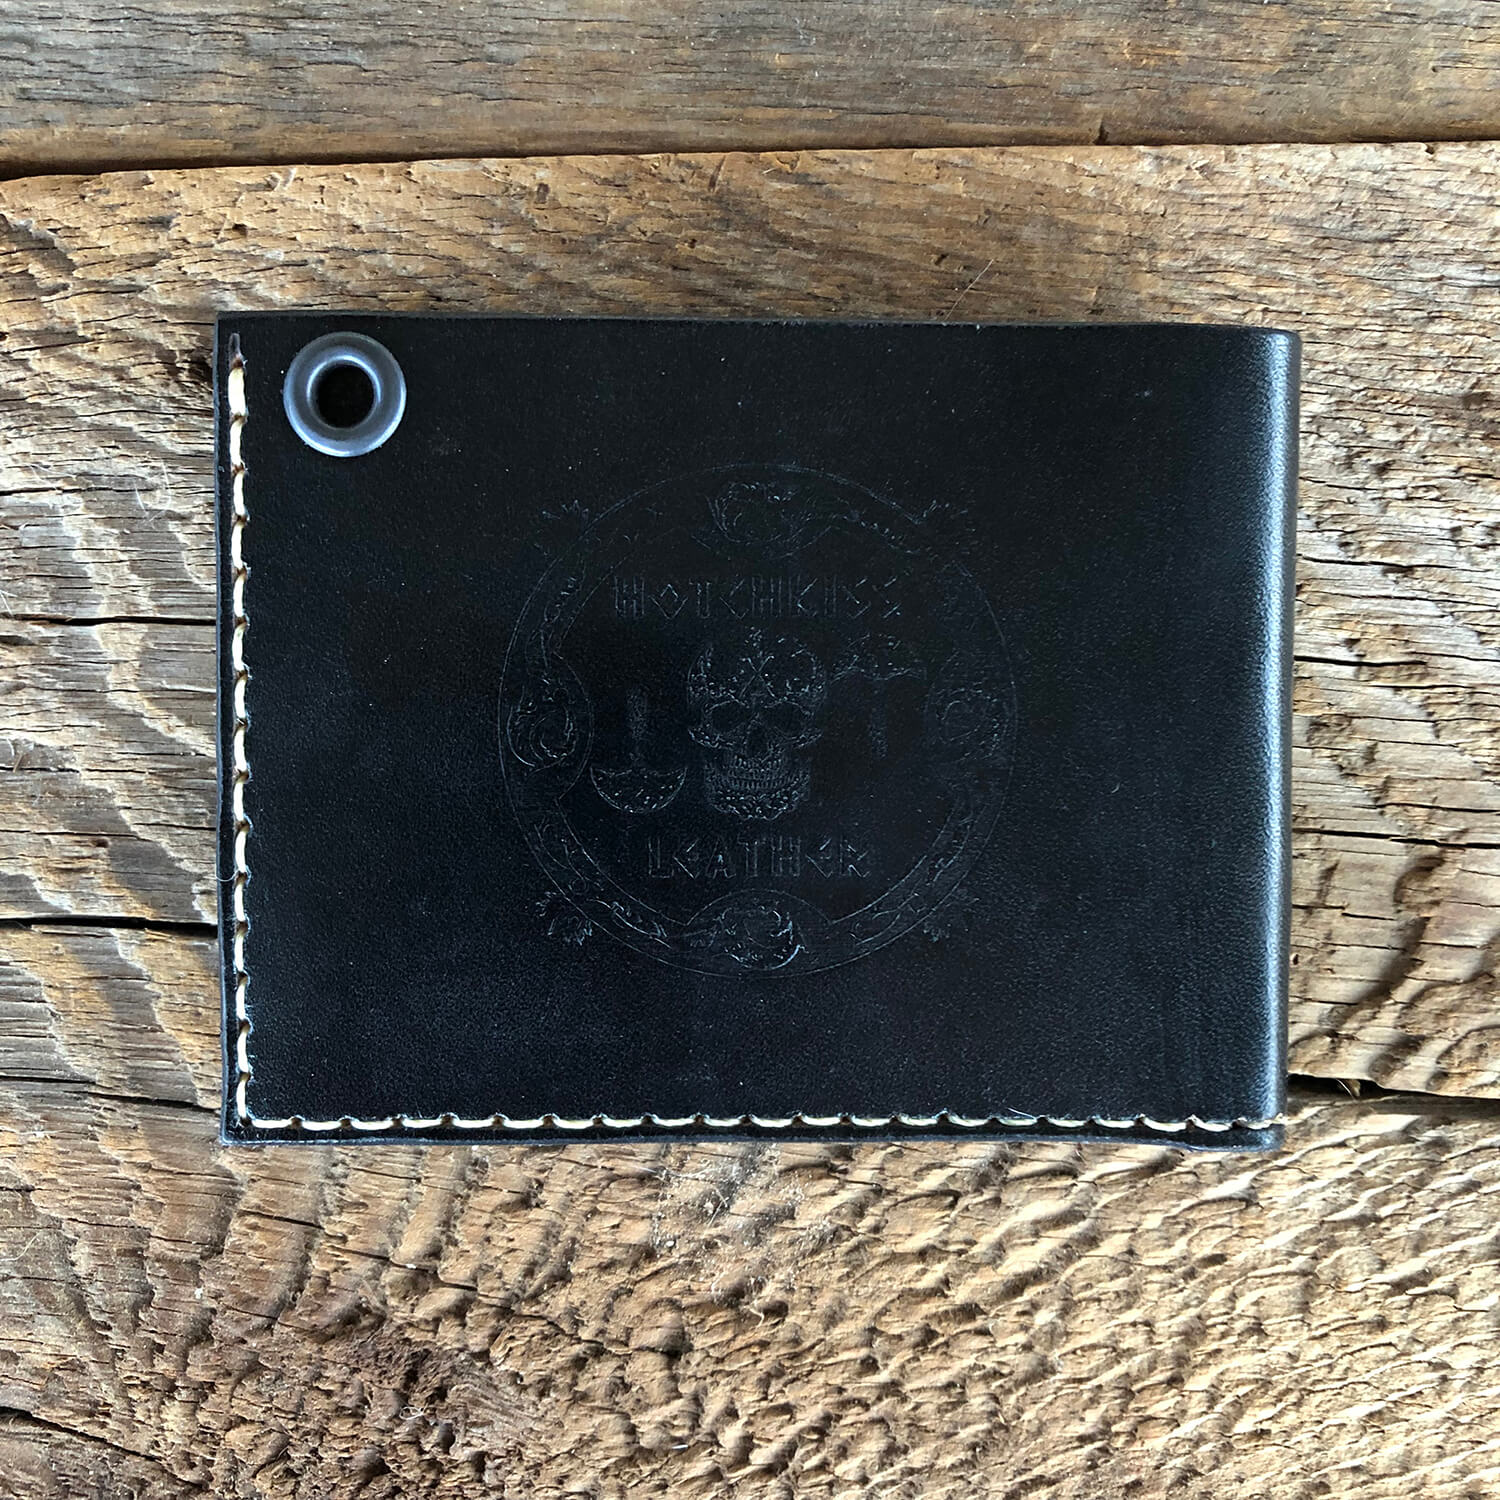 Subjugation - Custom Leather Monster Wallet | Hotchkiss Leather